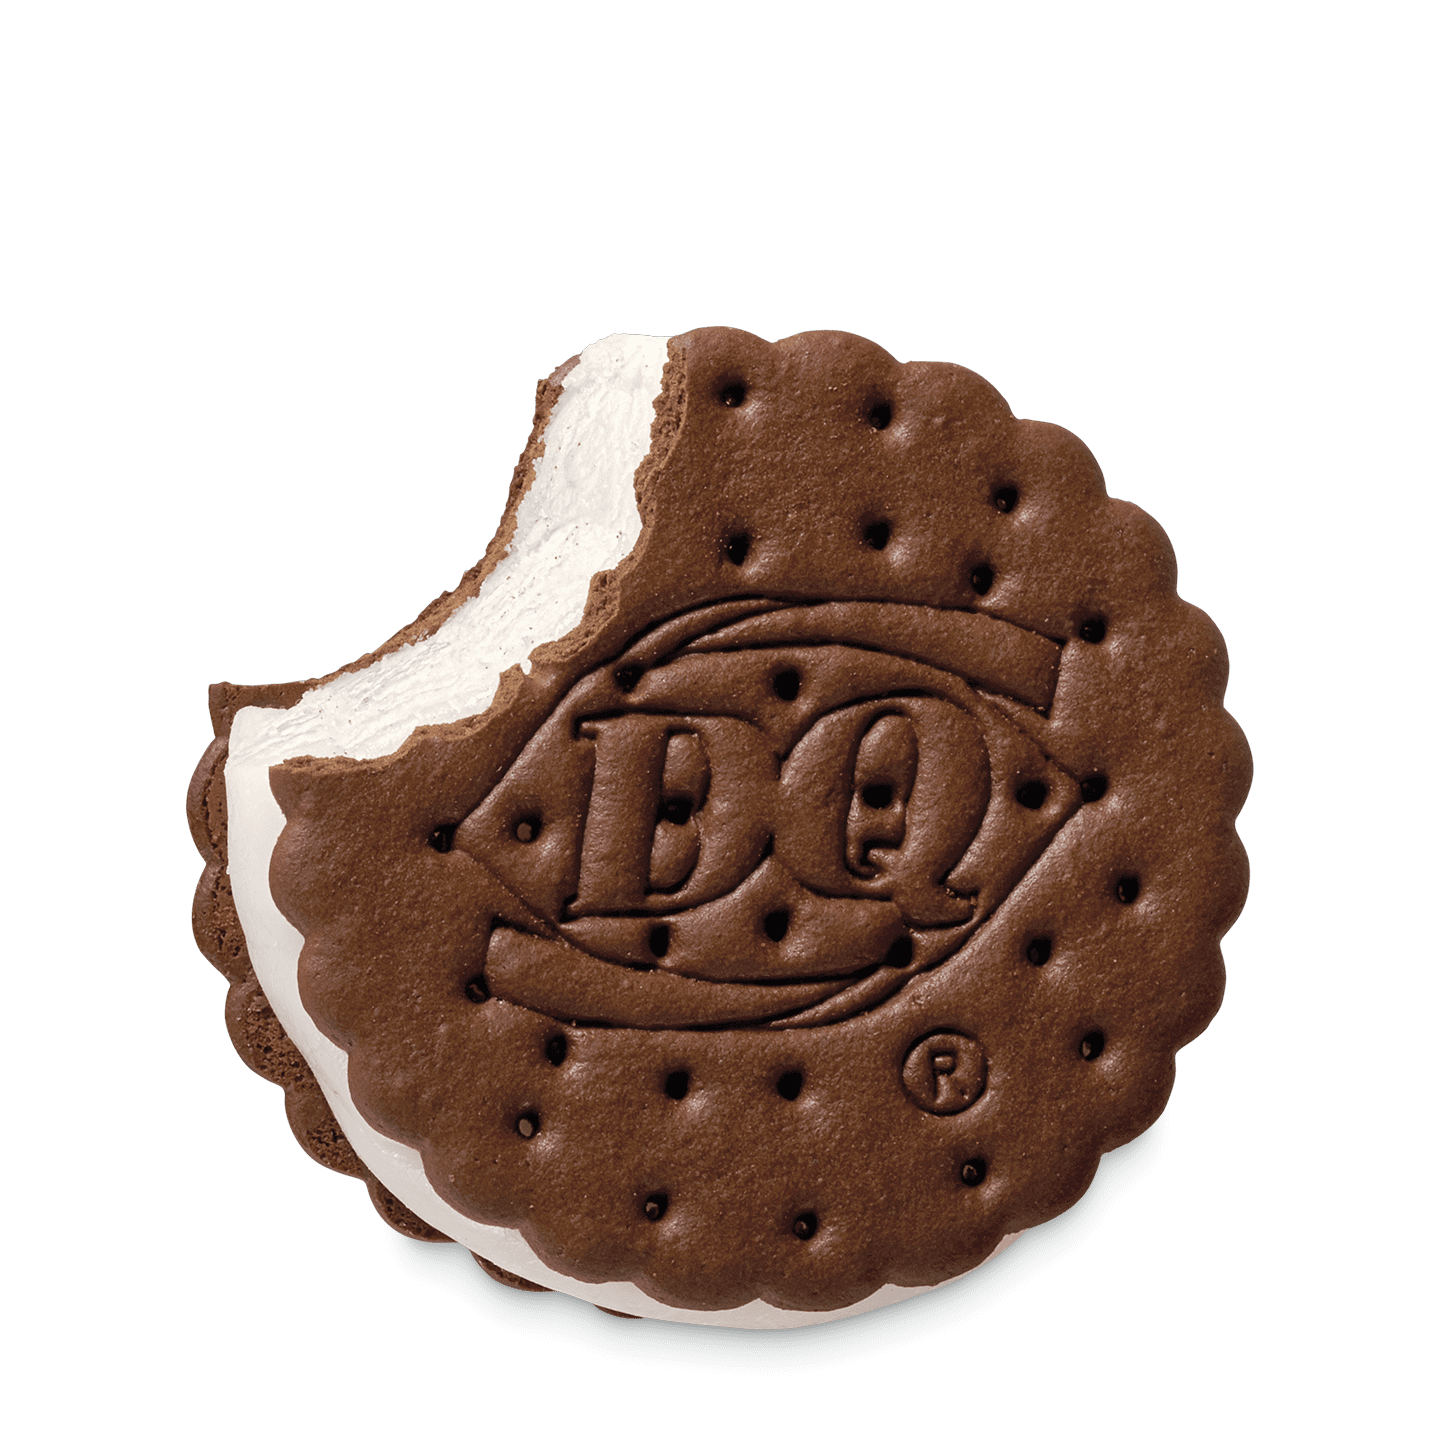 DQ Dairy Queen Artificial Ice Cream Sandwich Pretend Play Food 